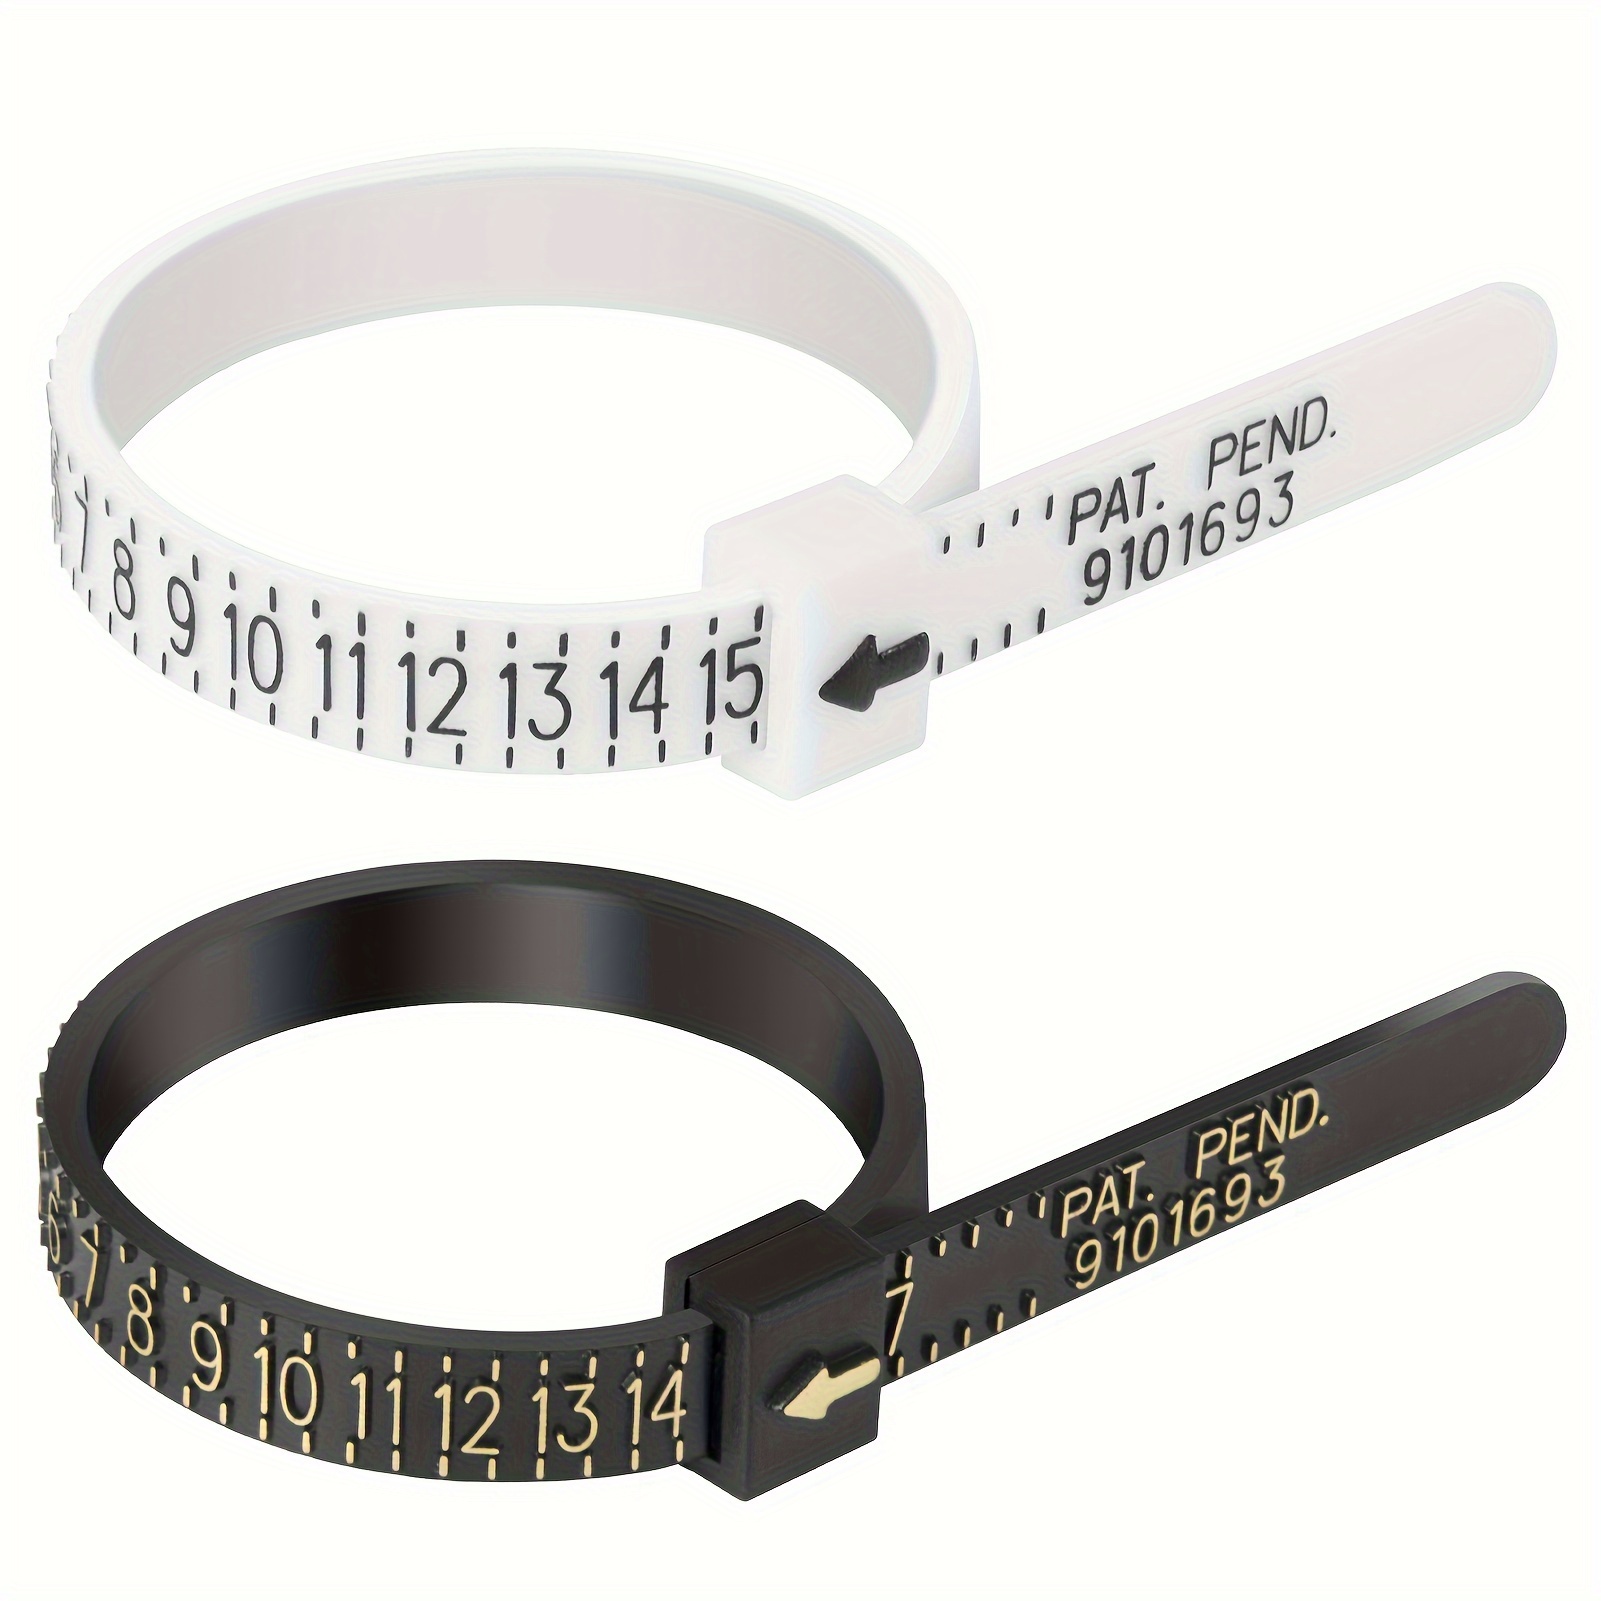  Finger and Wrist Measuring Tool Set, Universal Ring